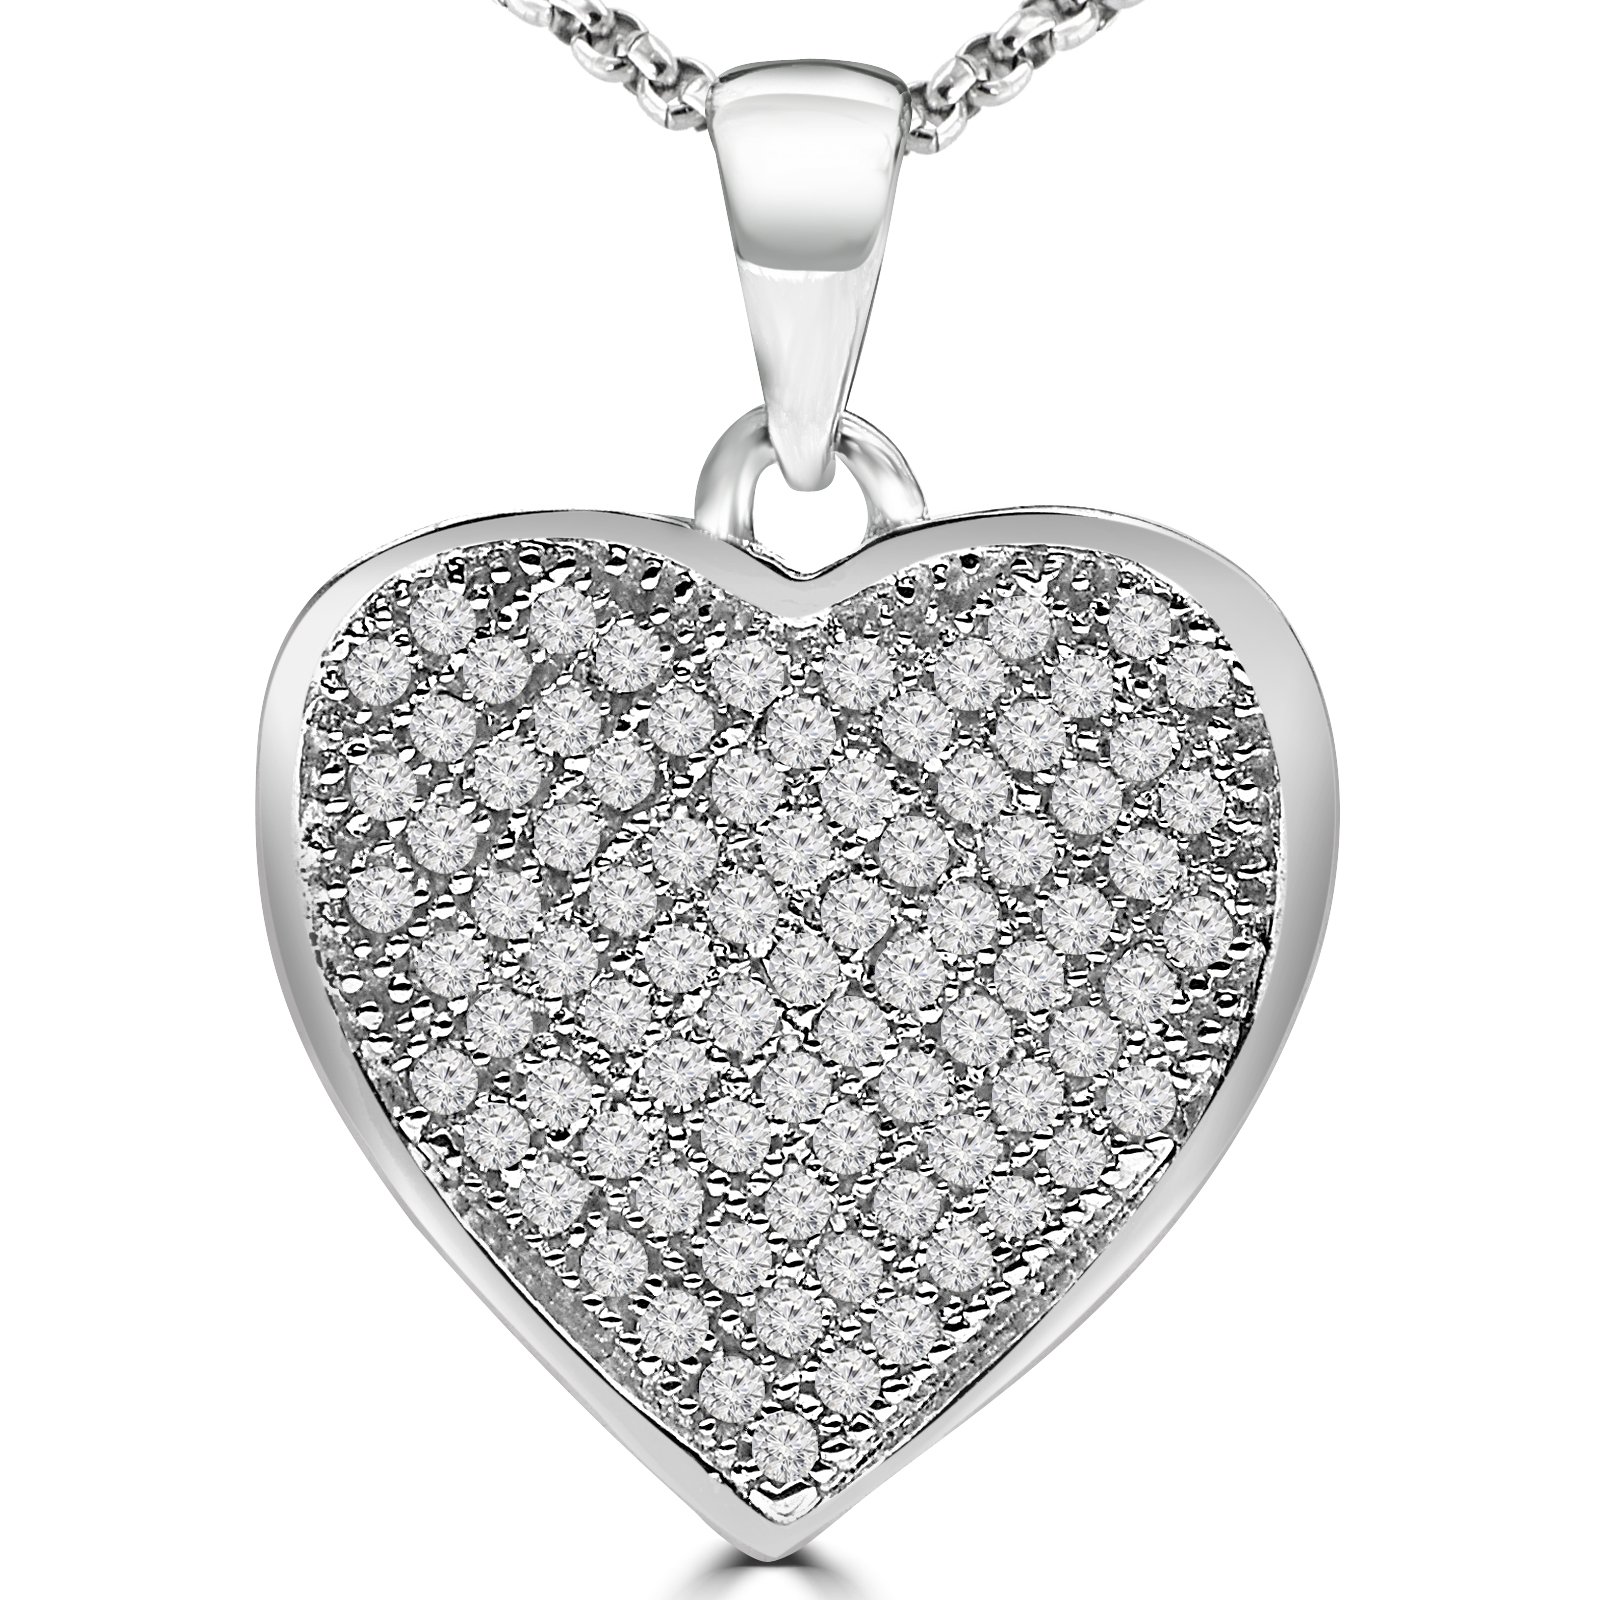 .25 CT VS1 F ROUND DIAMOND HEART PENDANT NECKLACE 14K WHITE GOLD | eBay